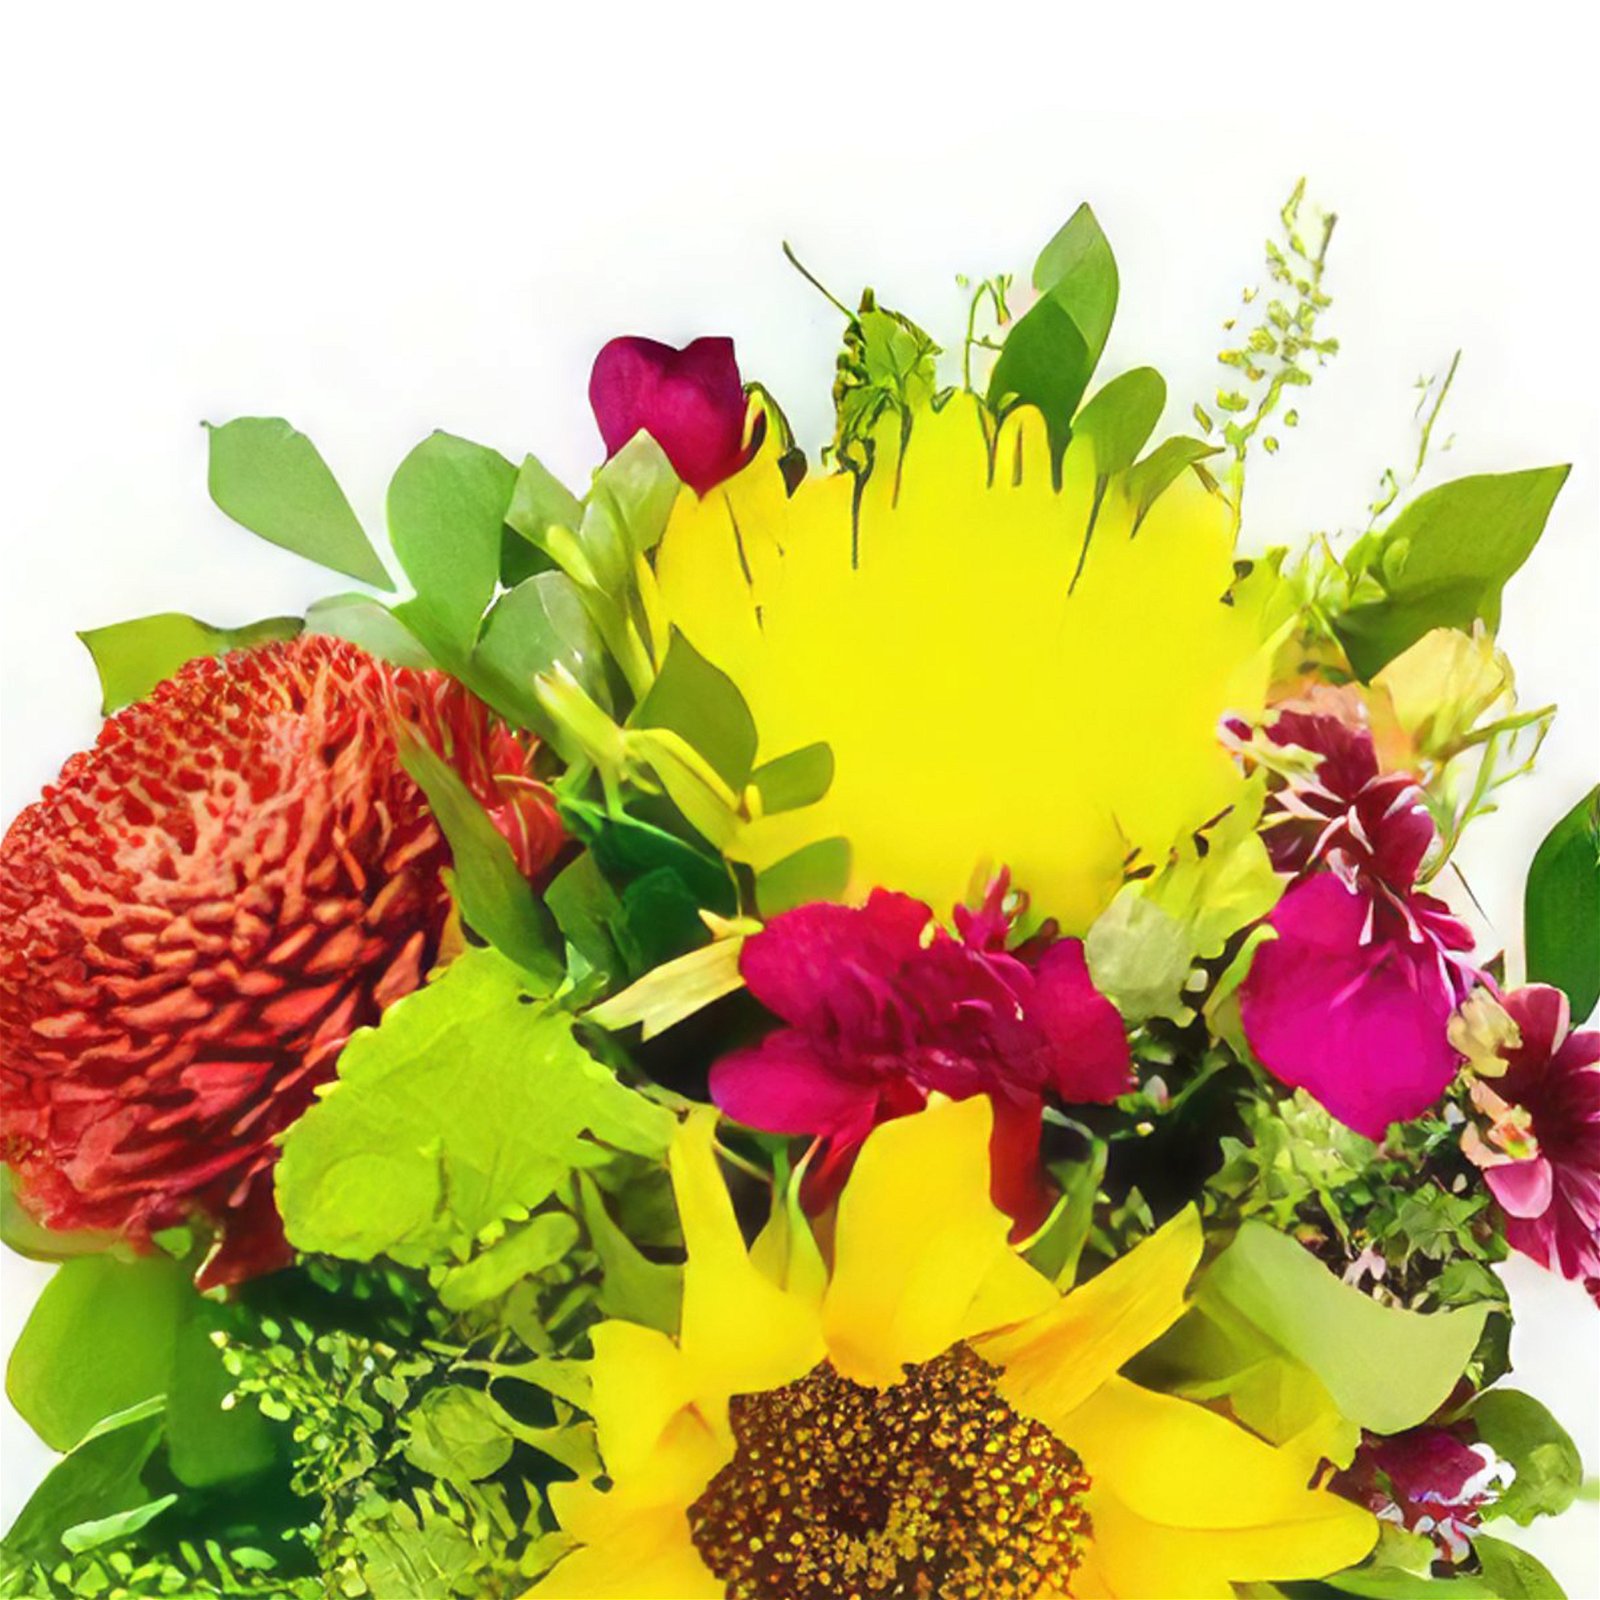 Hoyo de Manicaragua flowers  -  Spring love Flower Bouquet/Arrangement